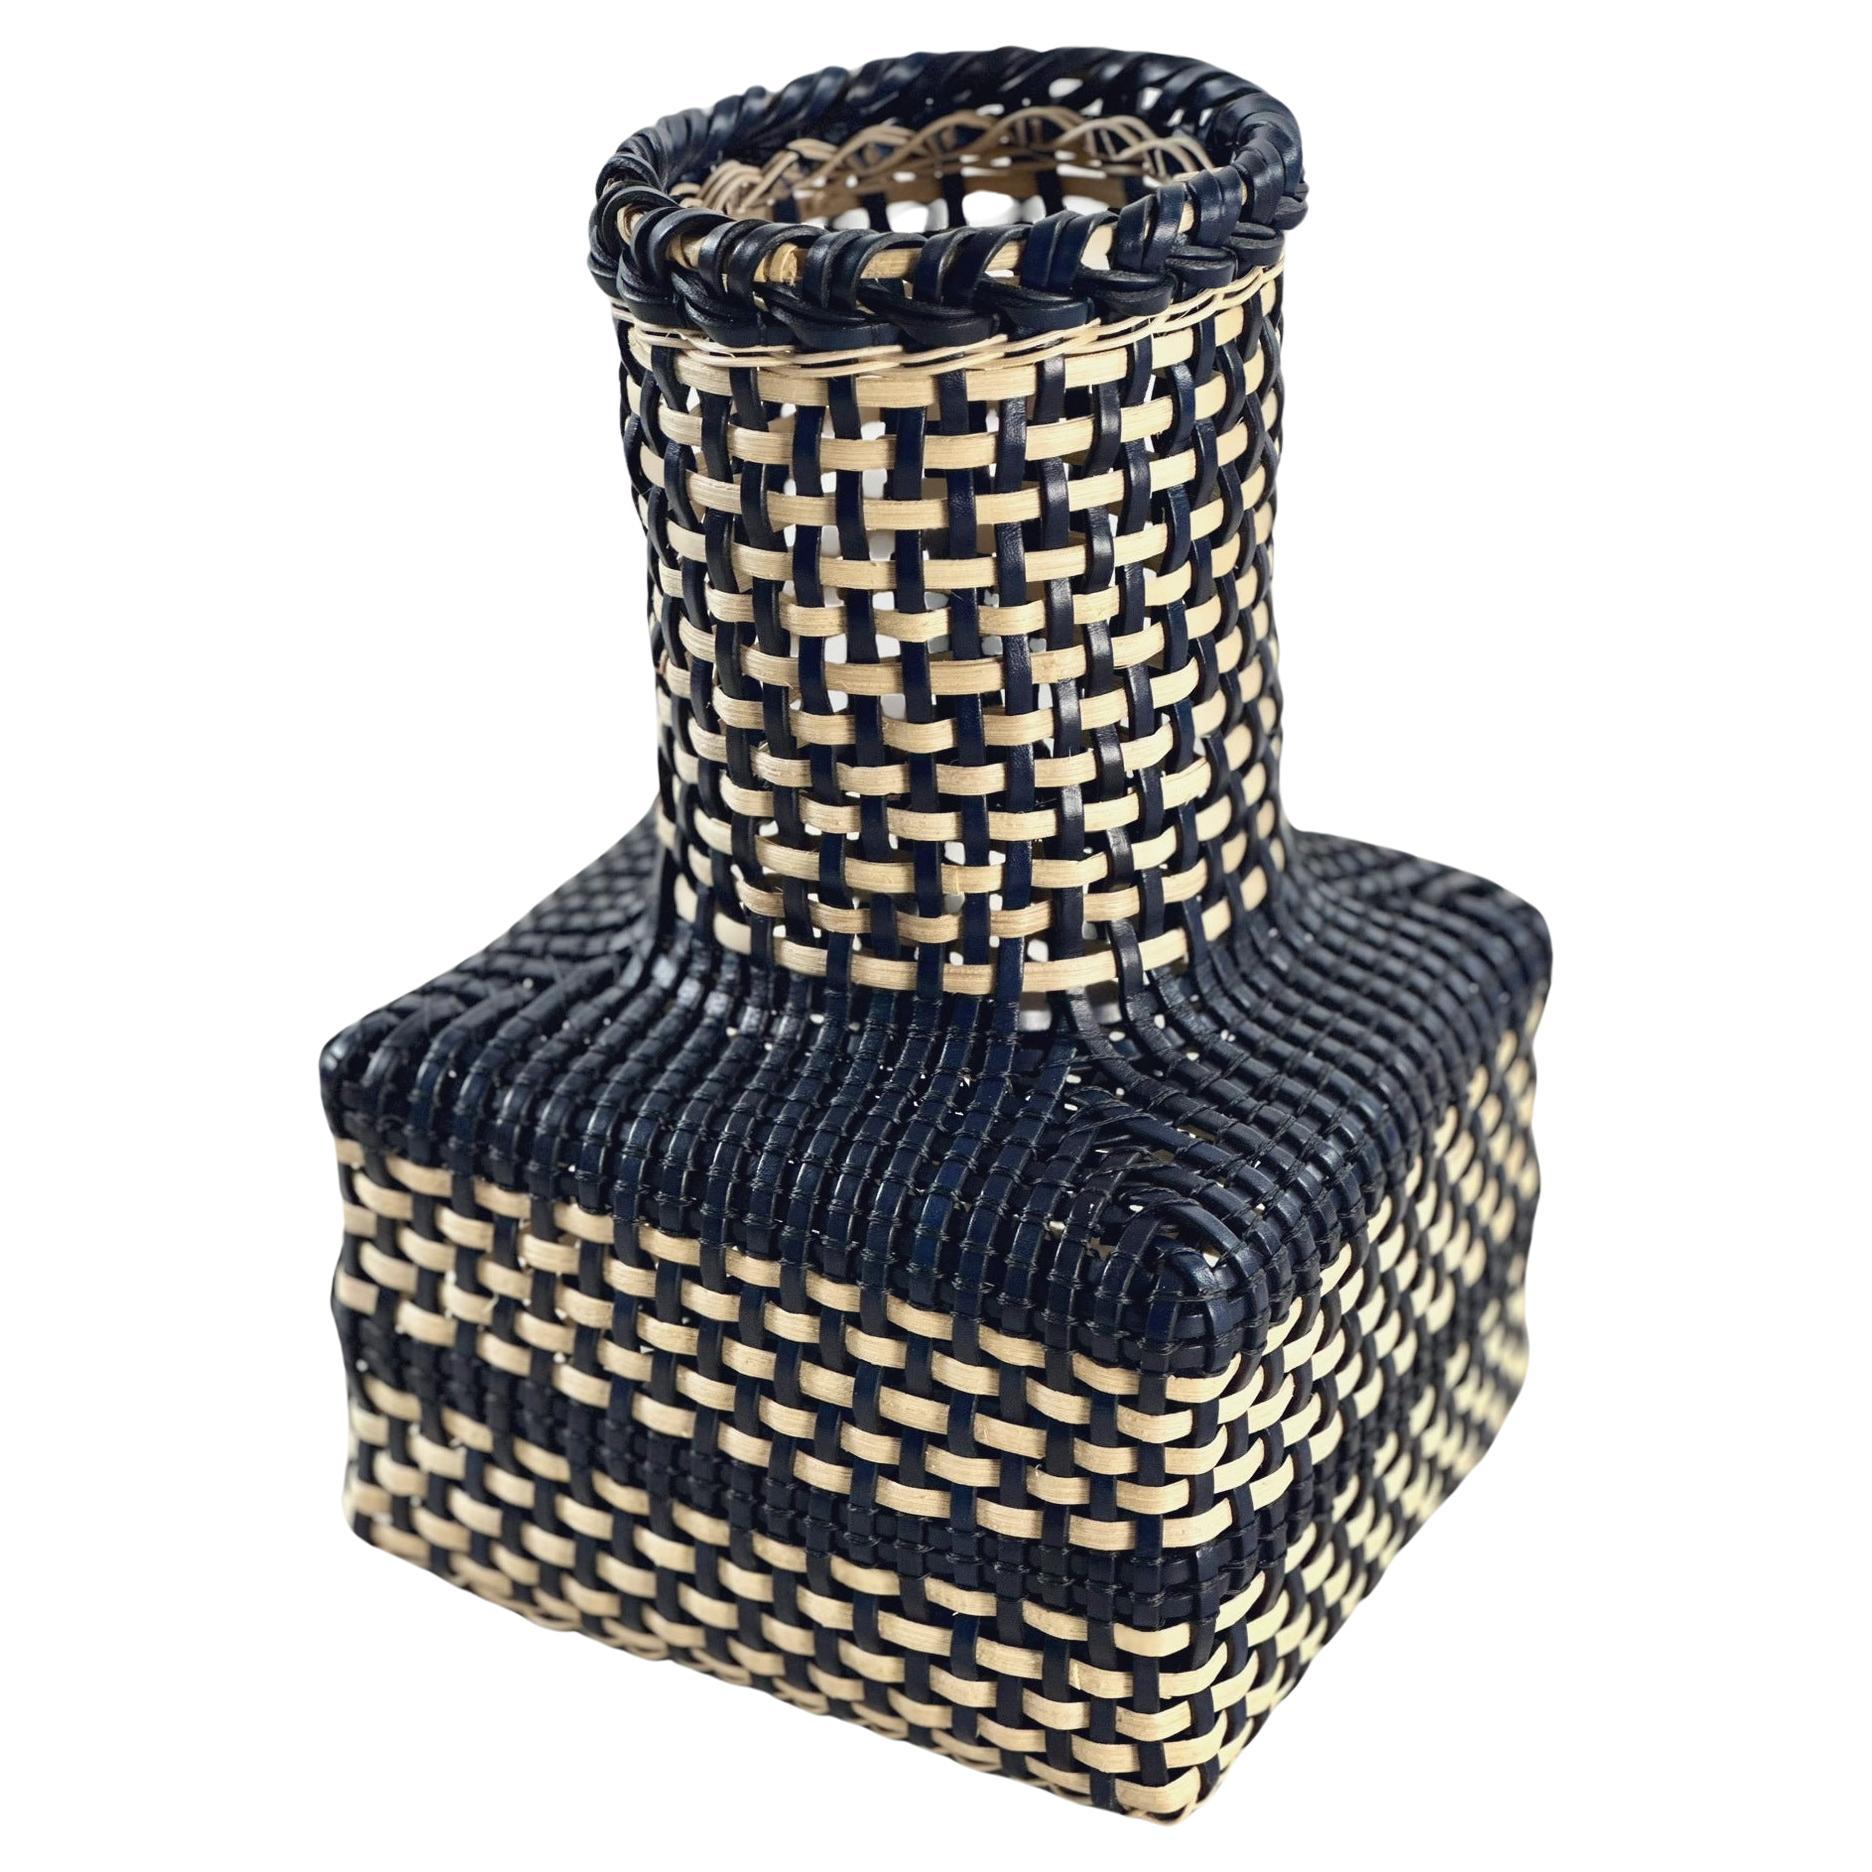 Japanese Ikebana Inspired Leather & Cane Handmade Basket Navy & Off White Color For Sale